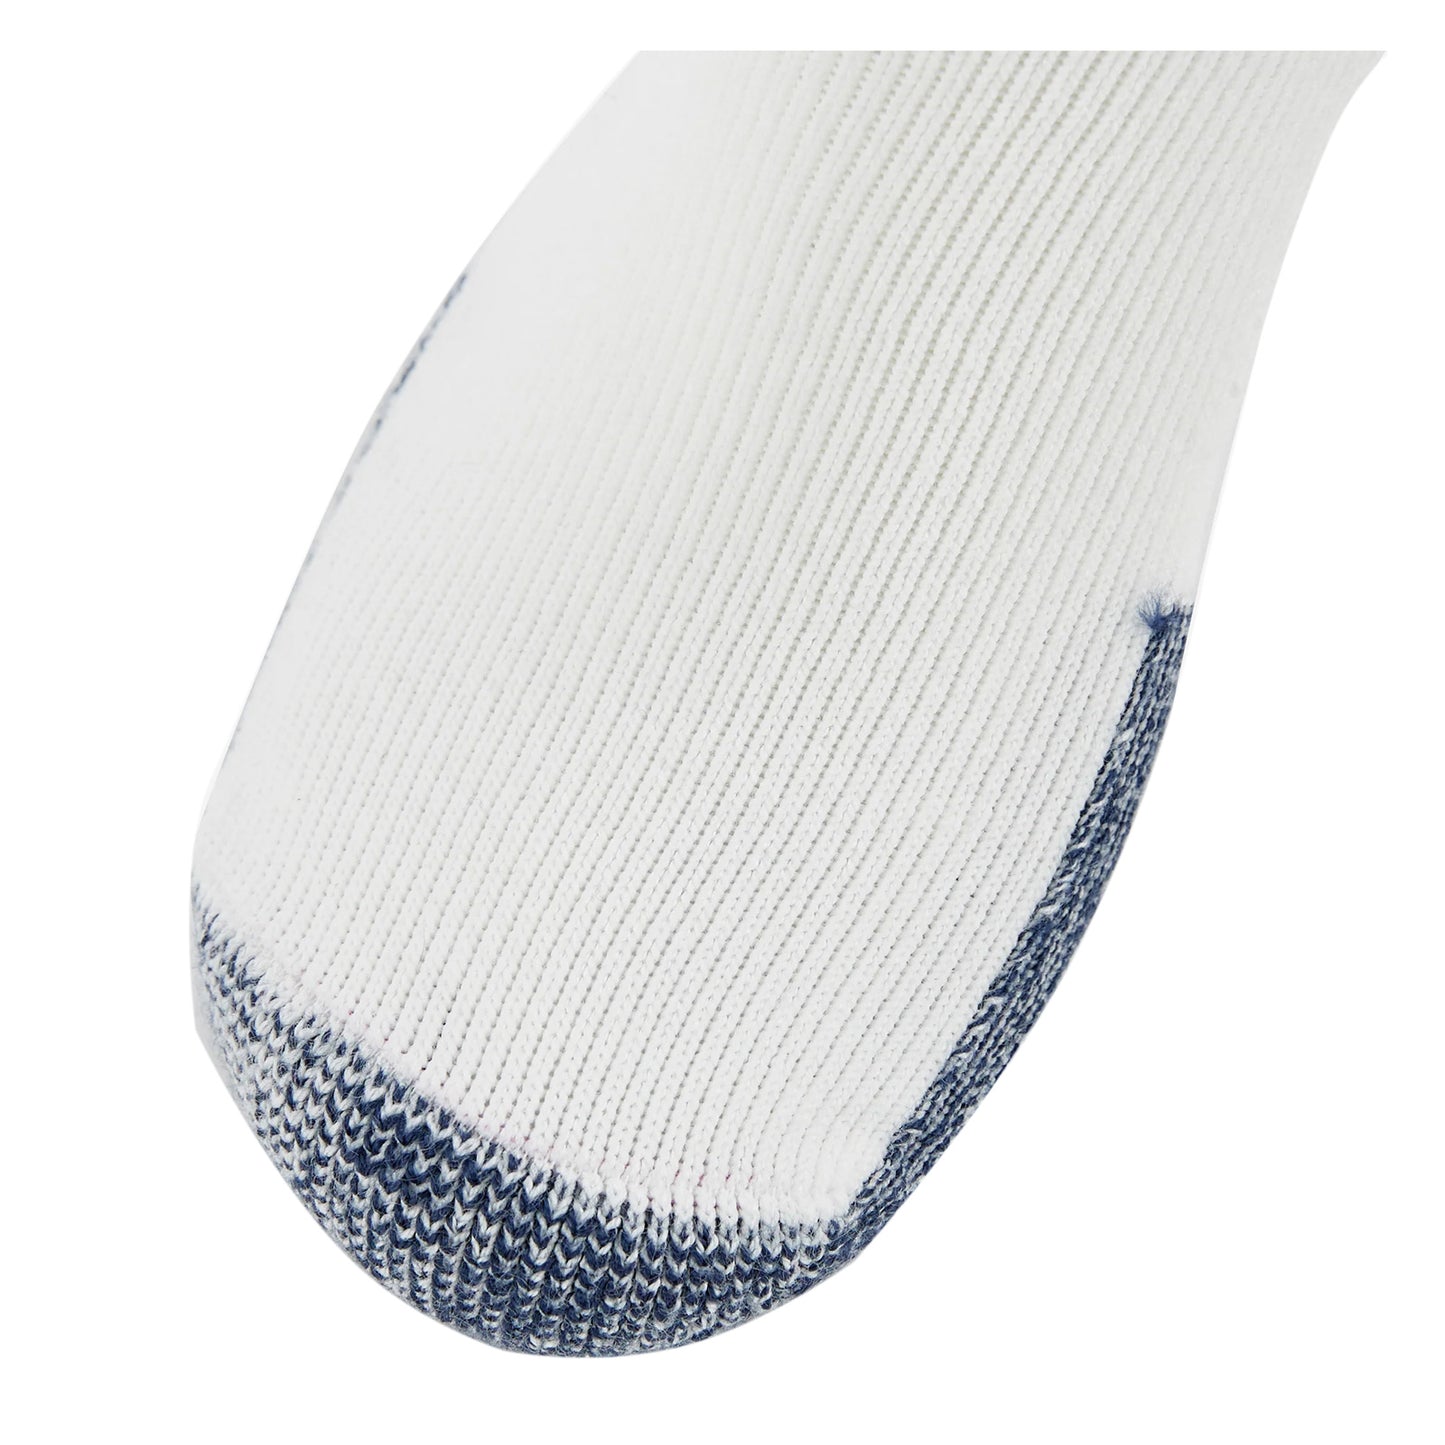 Peltz Shoes  Unisex Thorlo Socks Maximum Cushion Rolltop Running Socks- 1 Pair White Navy J00000-WHN